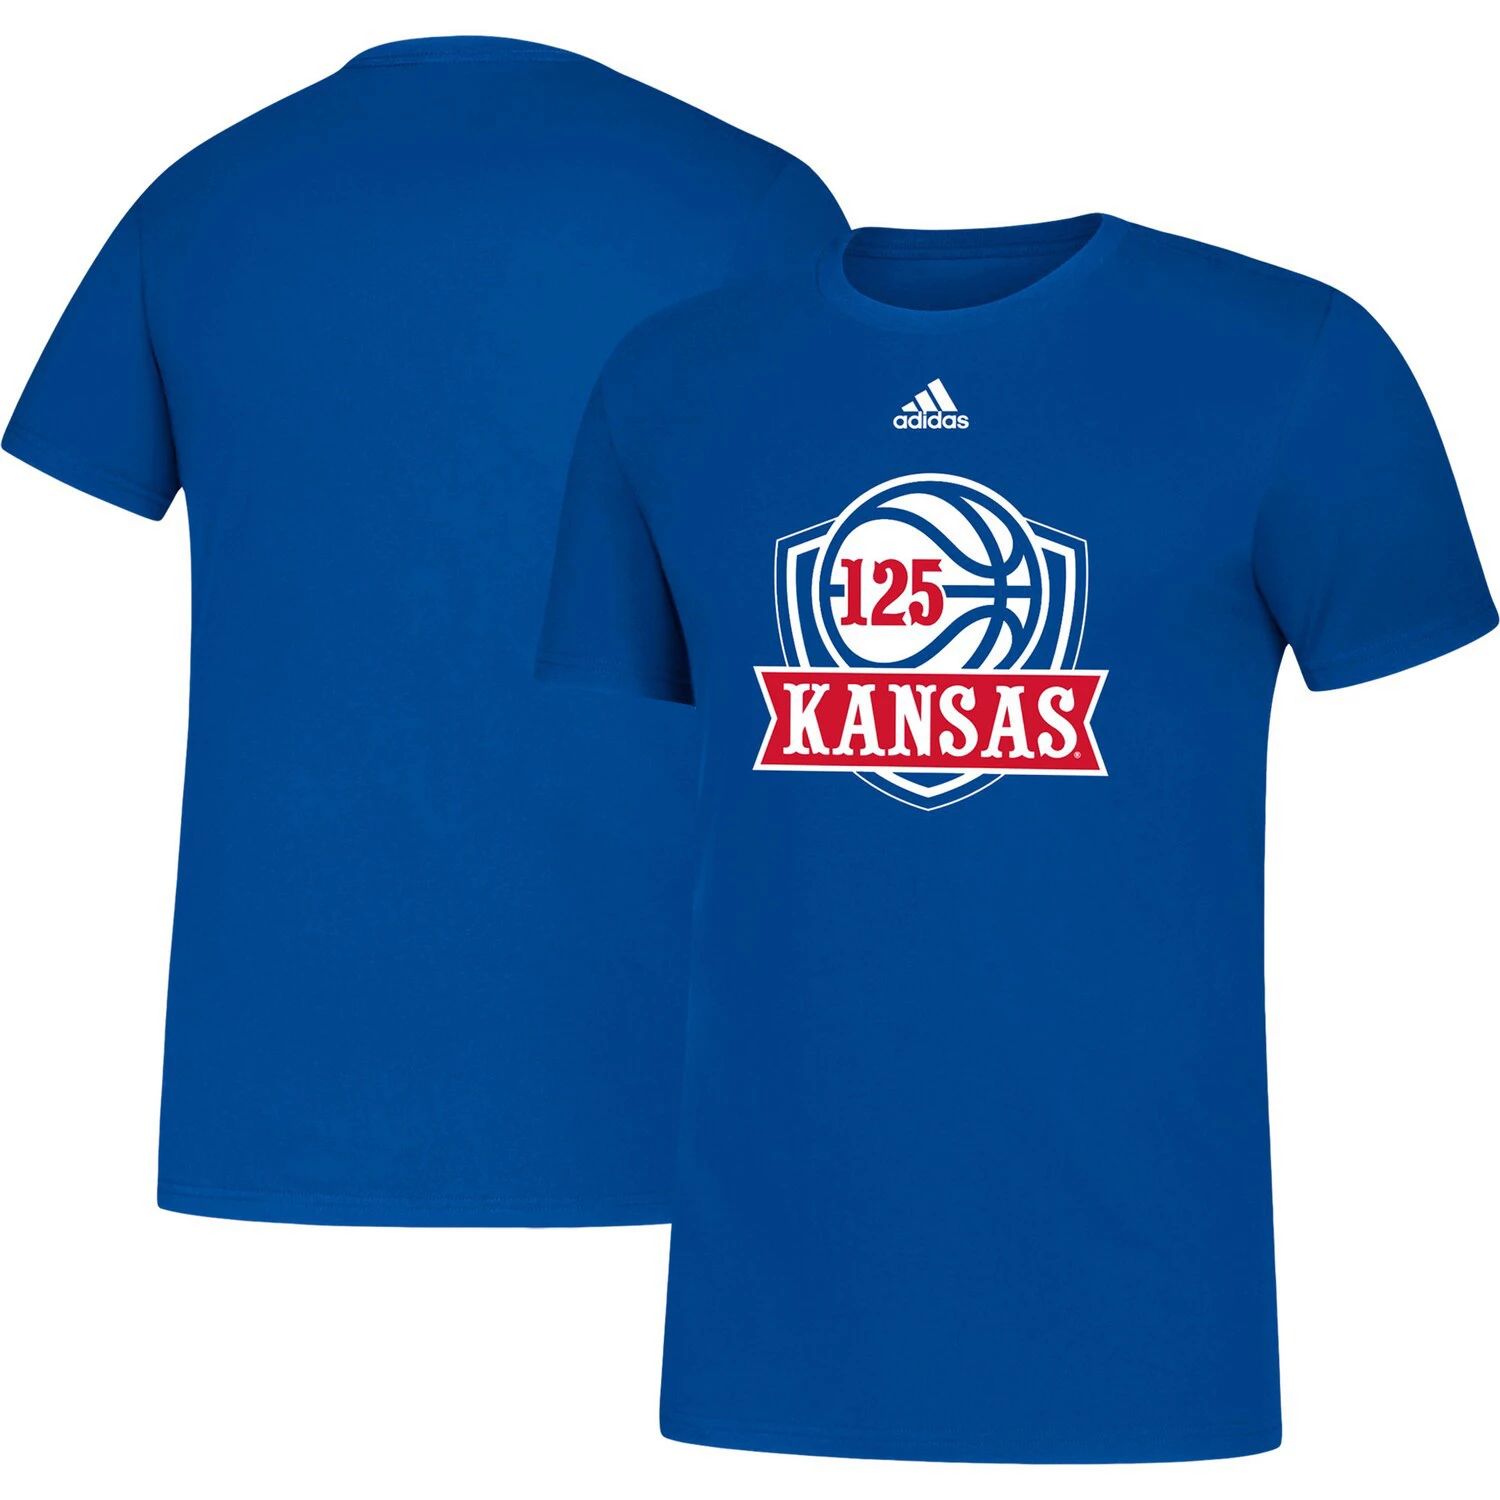 Мужская футболка с баскетбольным усилителем Royal Kansas Jayhawks 125th Season adidas